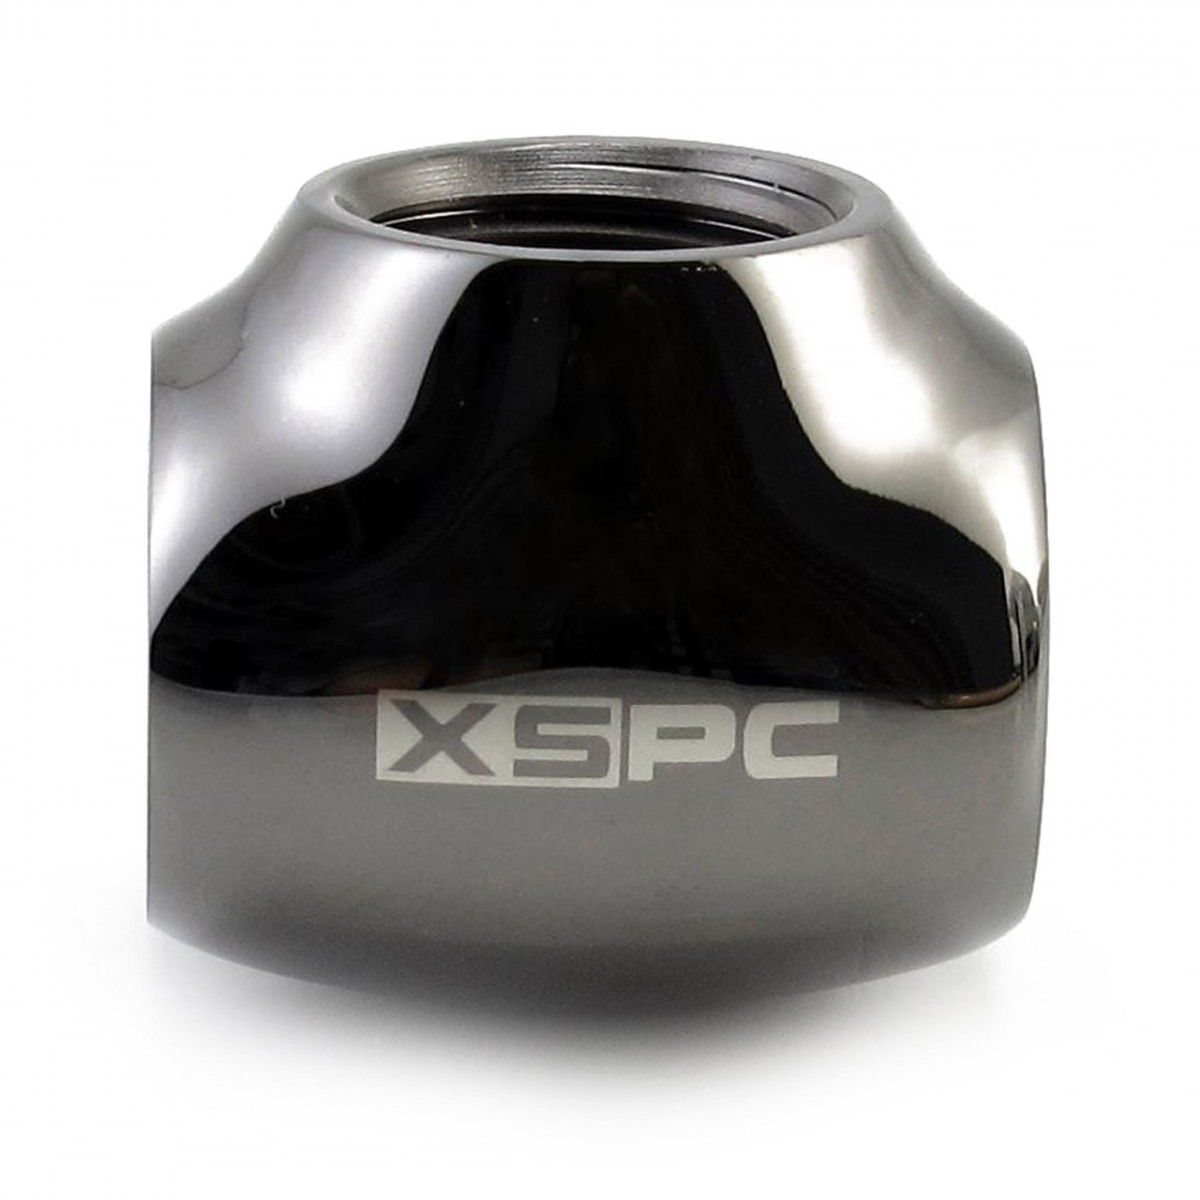 XSPC - XSPC G1/4 T Fitting (Black Chrome)